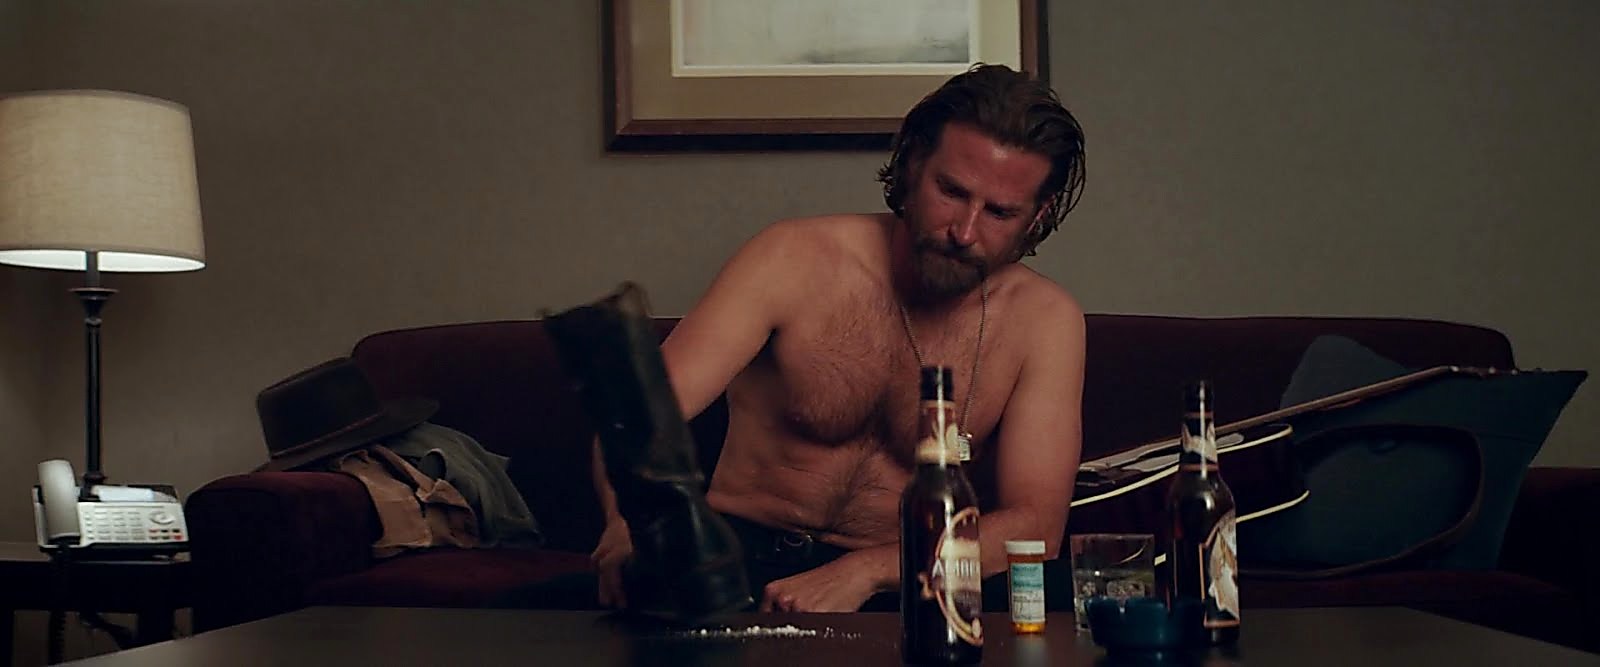 Bradley Cooper sexy shirtless scene January 20, 2019, 8am